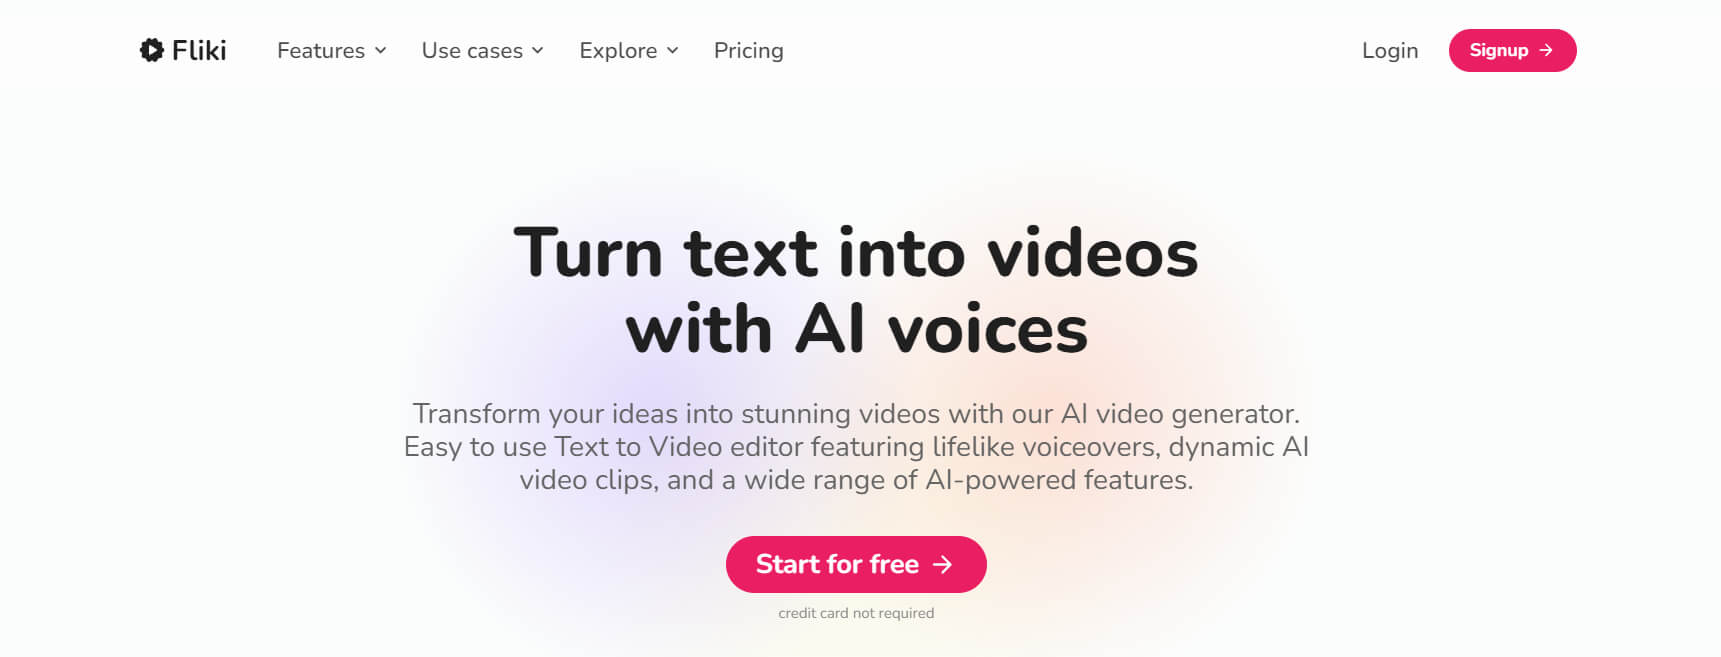 AI-powered video generator turns text into lifelike videos.